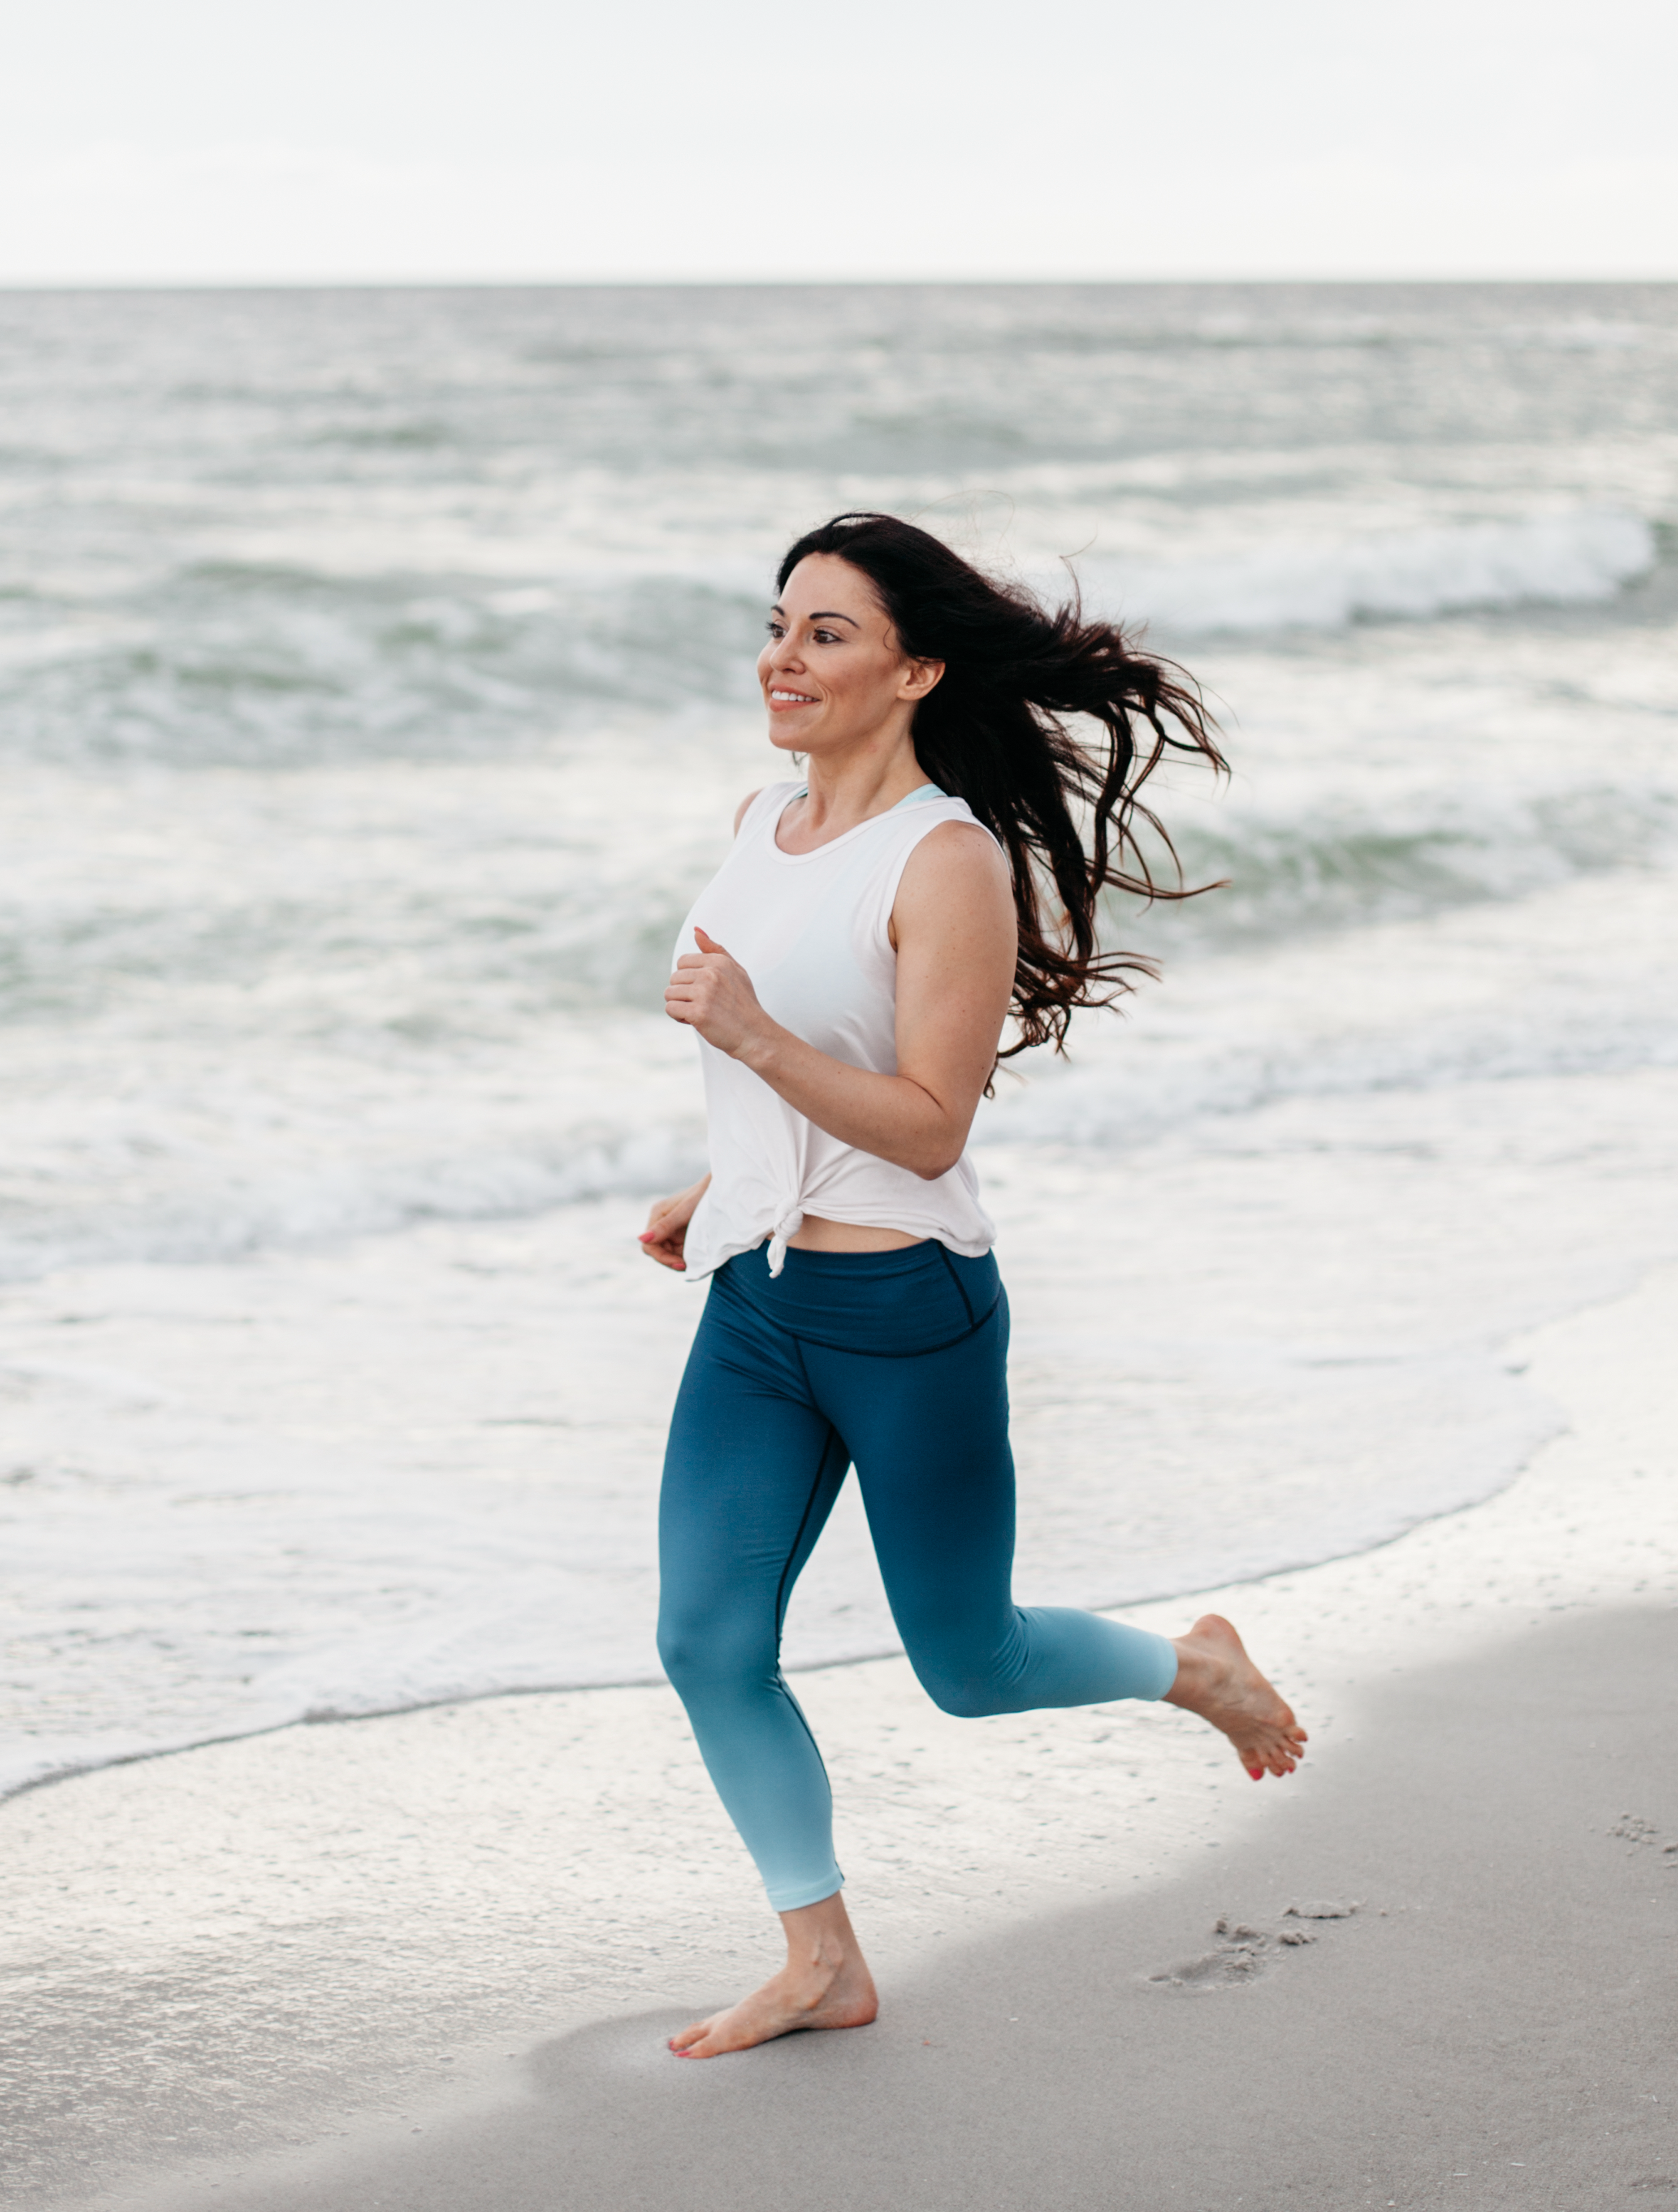 Christina Carlyle jogging on a beach